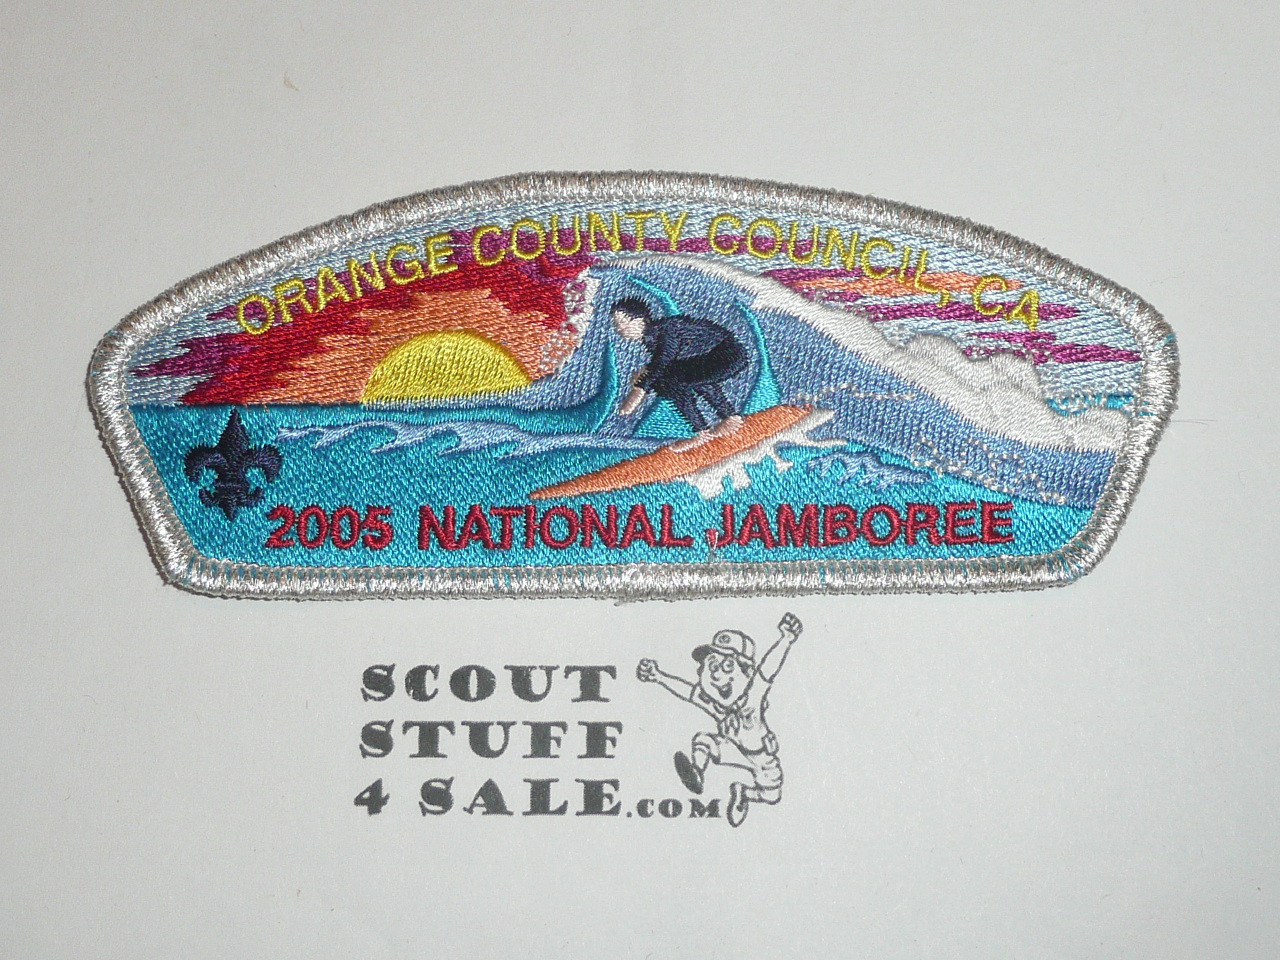 2005 National Jamboree JSP - Orange County Council, Surfing